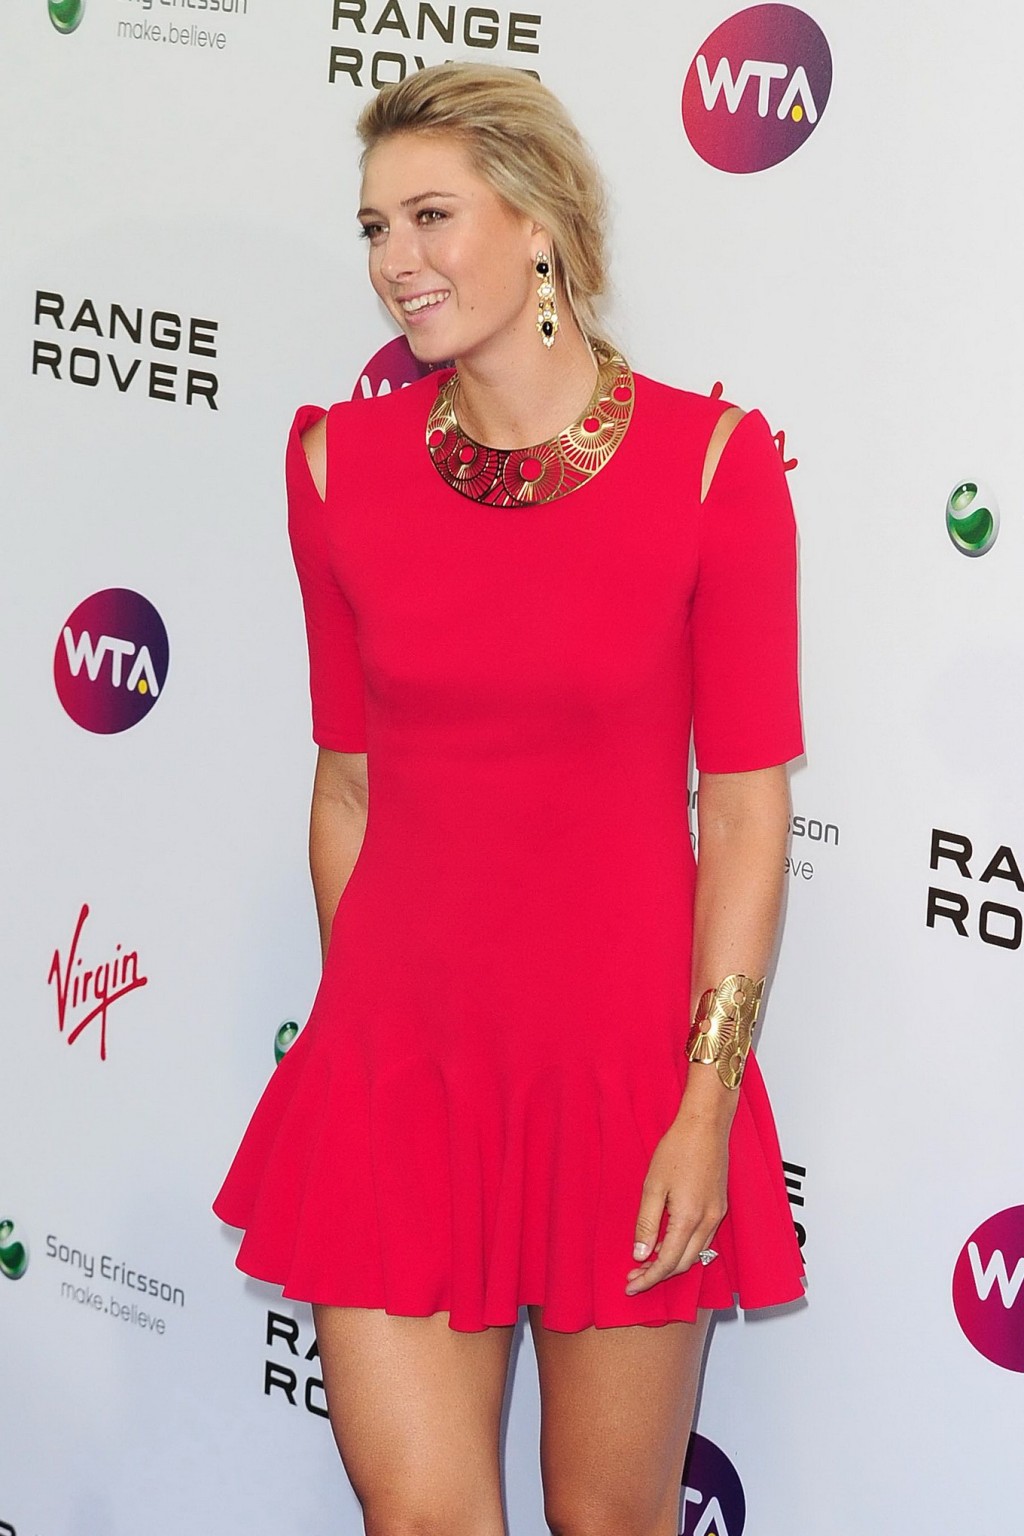 Maria Sharapova langbeinig im roten Minikleid auf der WTA Pre-Wimbledon Party
 #75299394